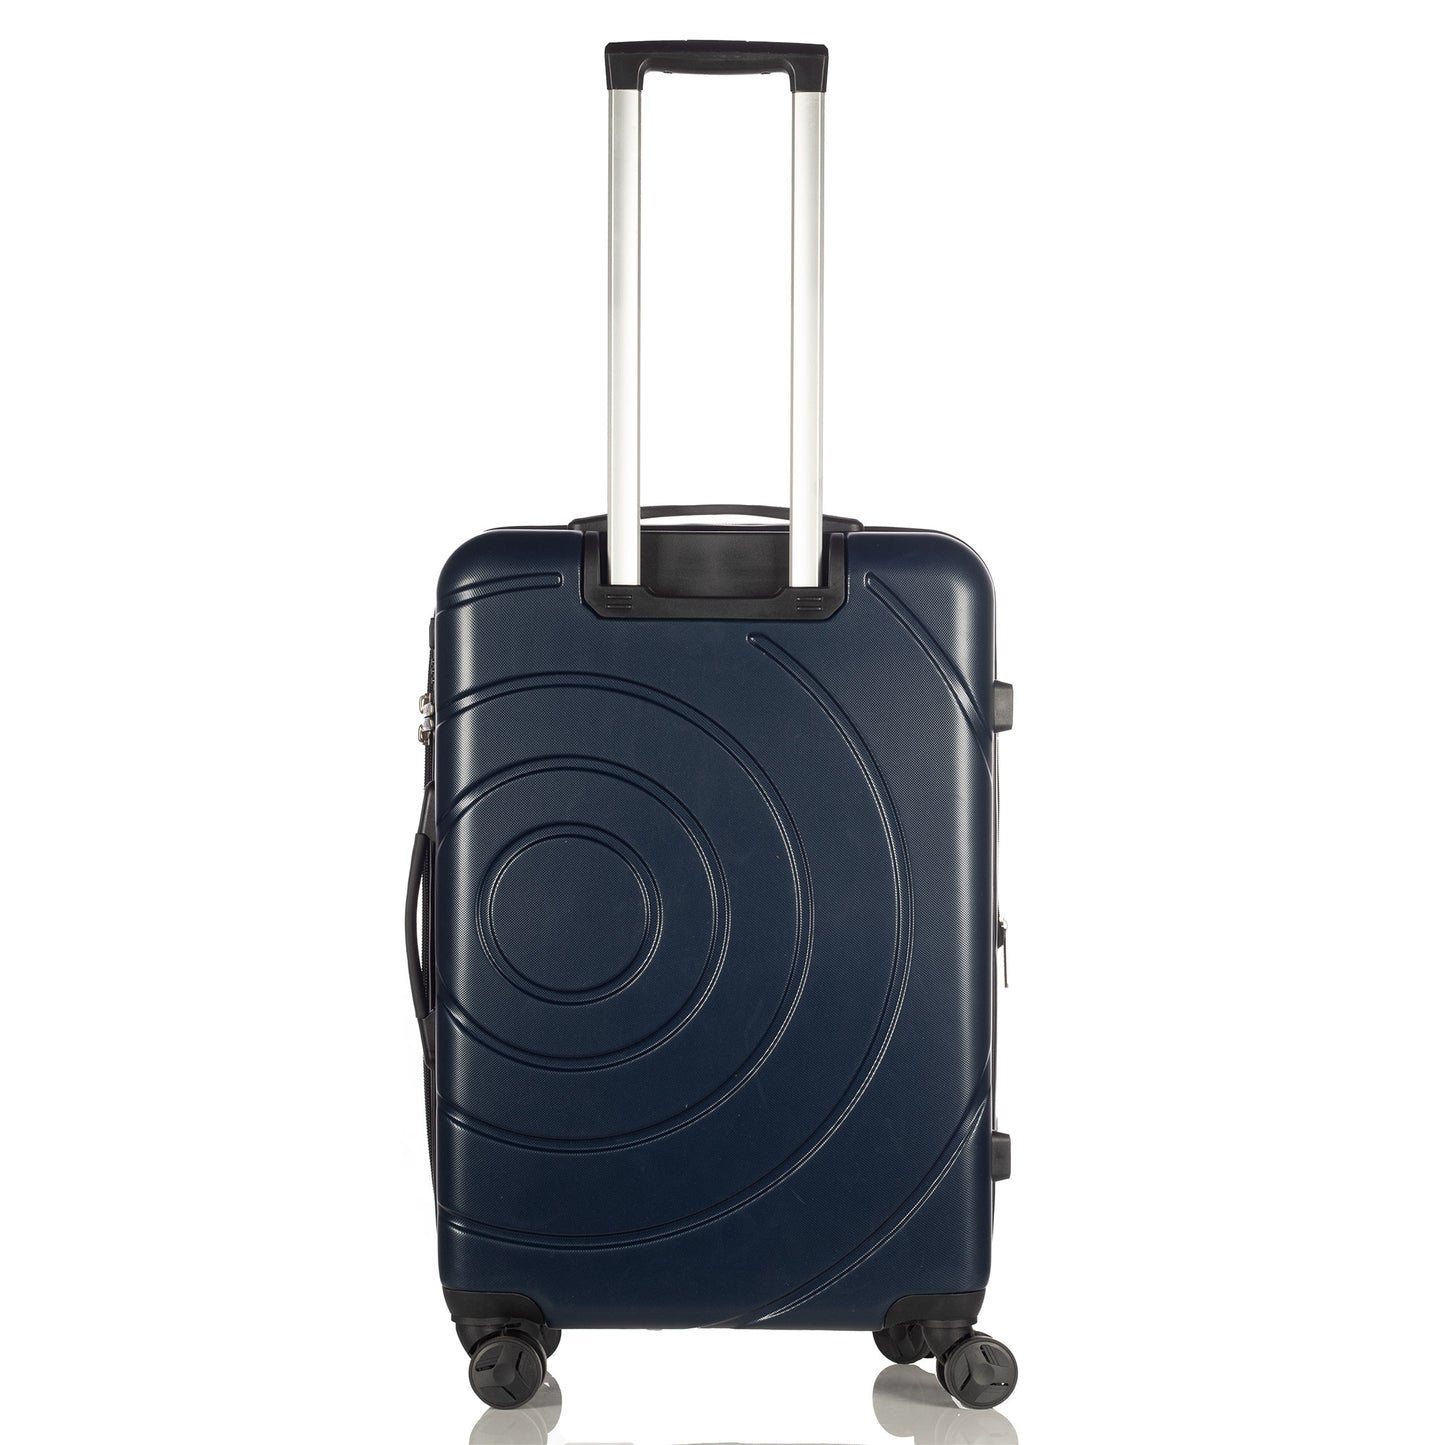 Hardhead Luggage 3 pieces set (20/24/28") Eco Hardside Travel Suitcase with 4 360 Wheels Lock Included, Blue